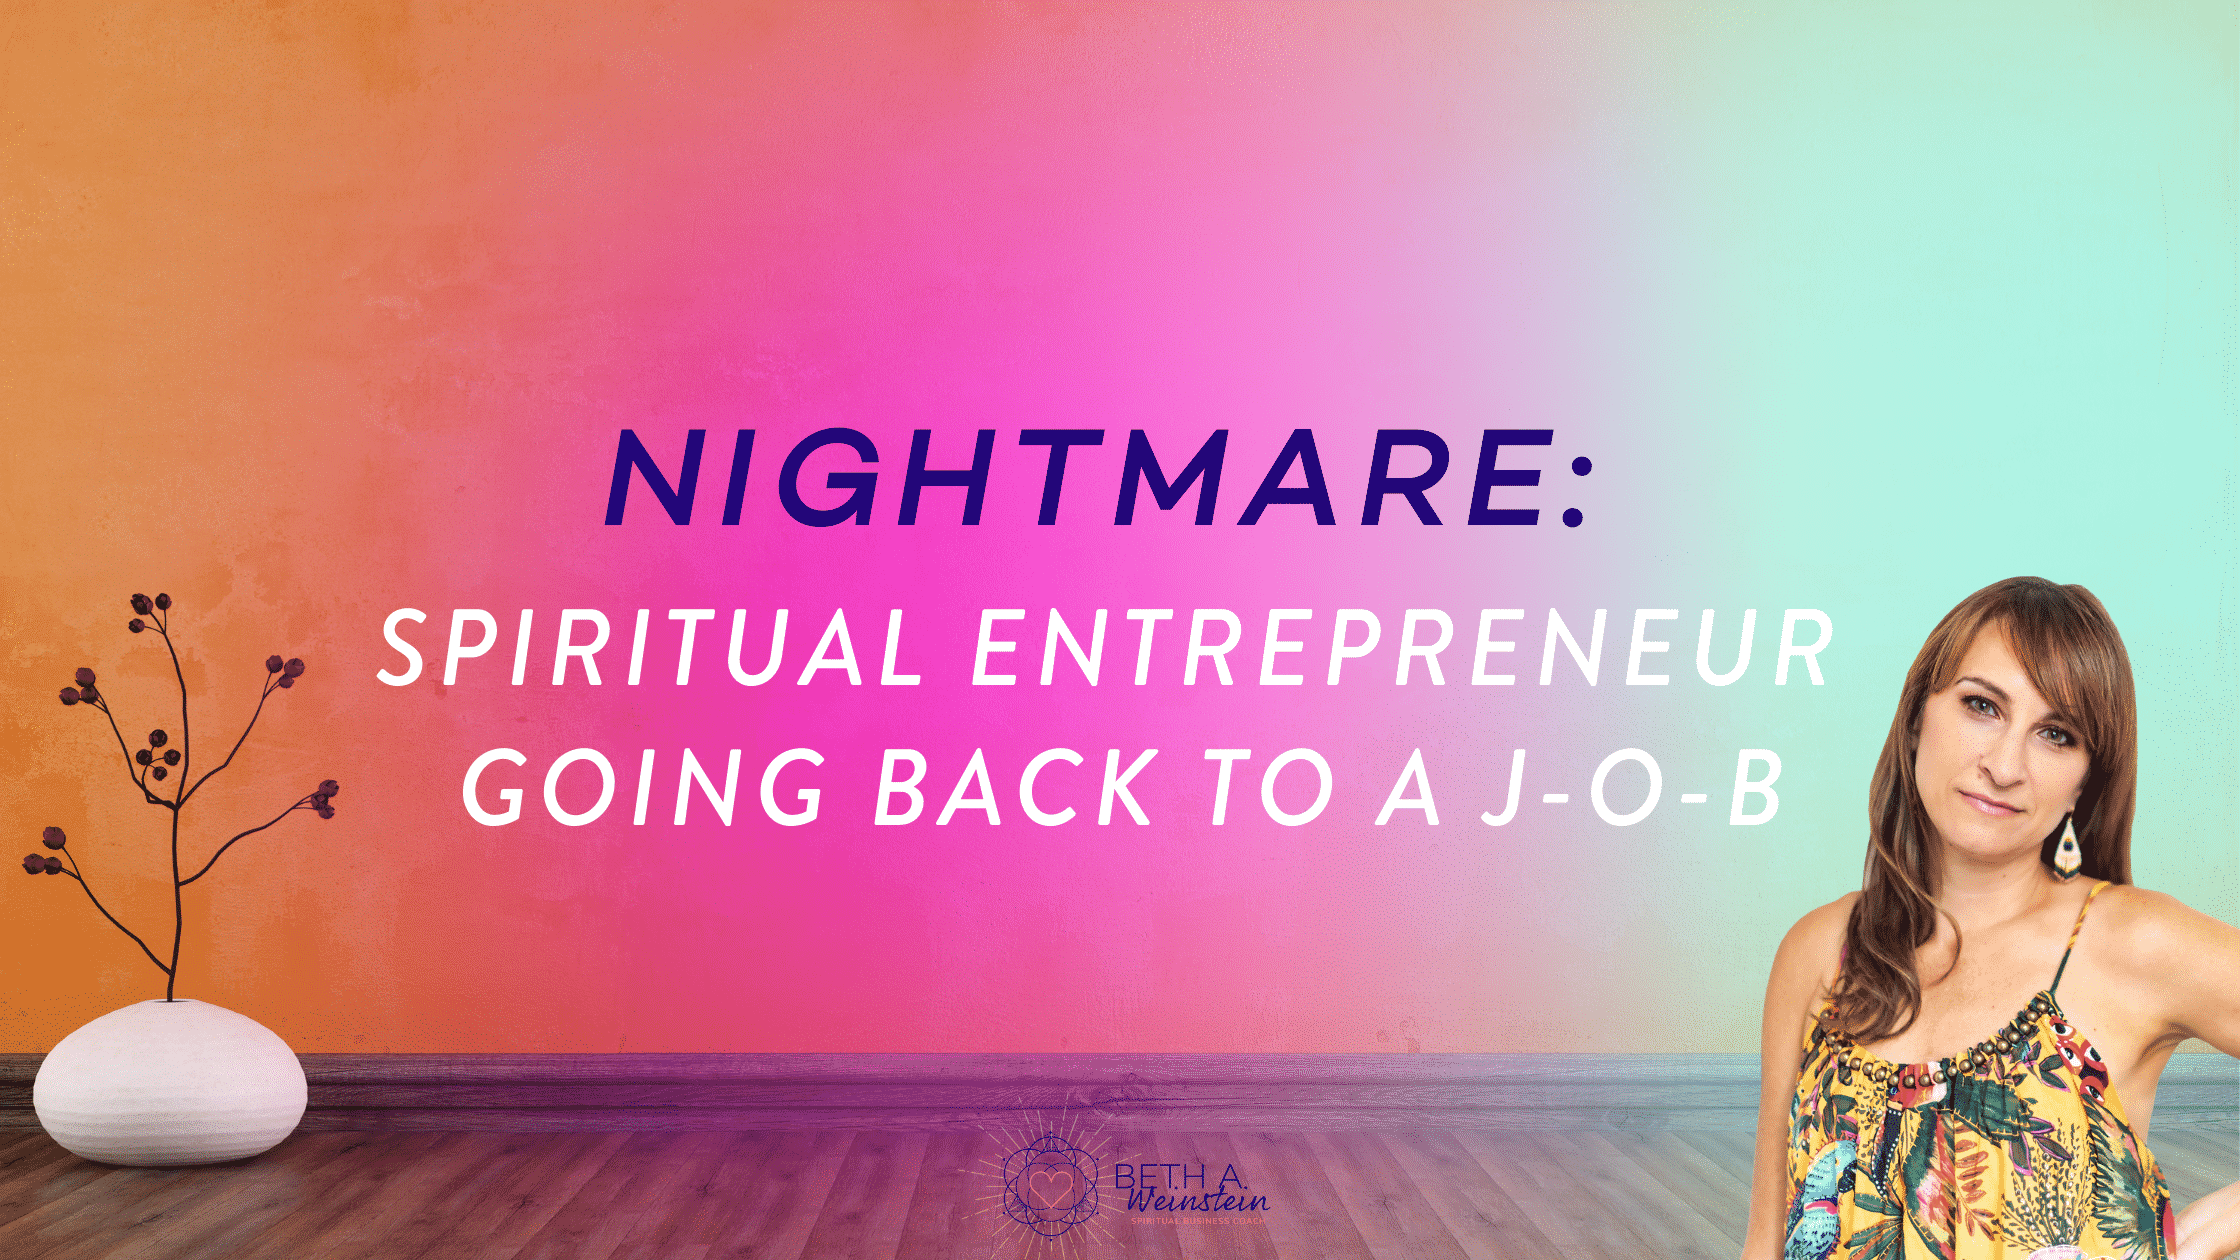 Nightmare: Spiritual Entrepreneur Going Back to a J-O-B